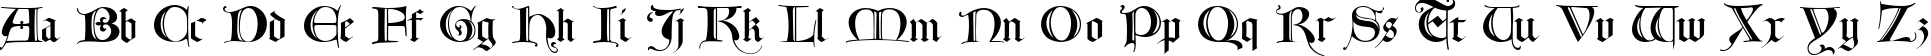 Пример написания английского алфавита шрифтом Lombardia